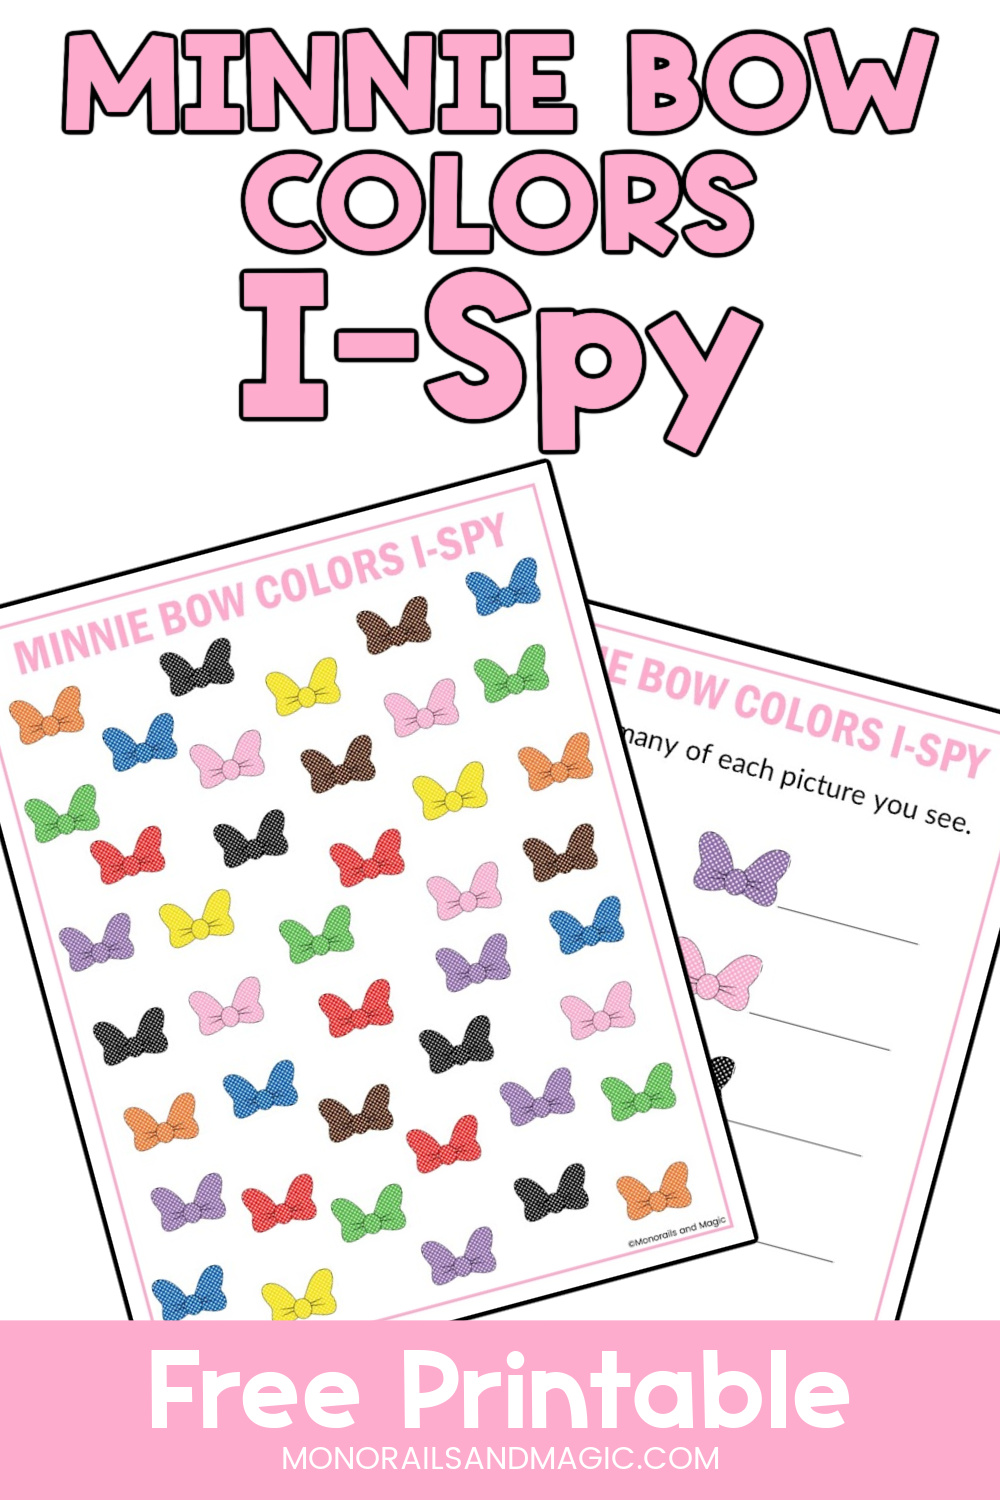 Free printable Minnie bow colors I-spy activity.